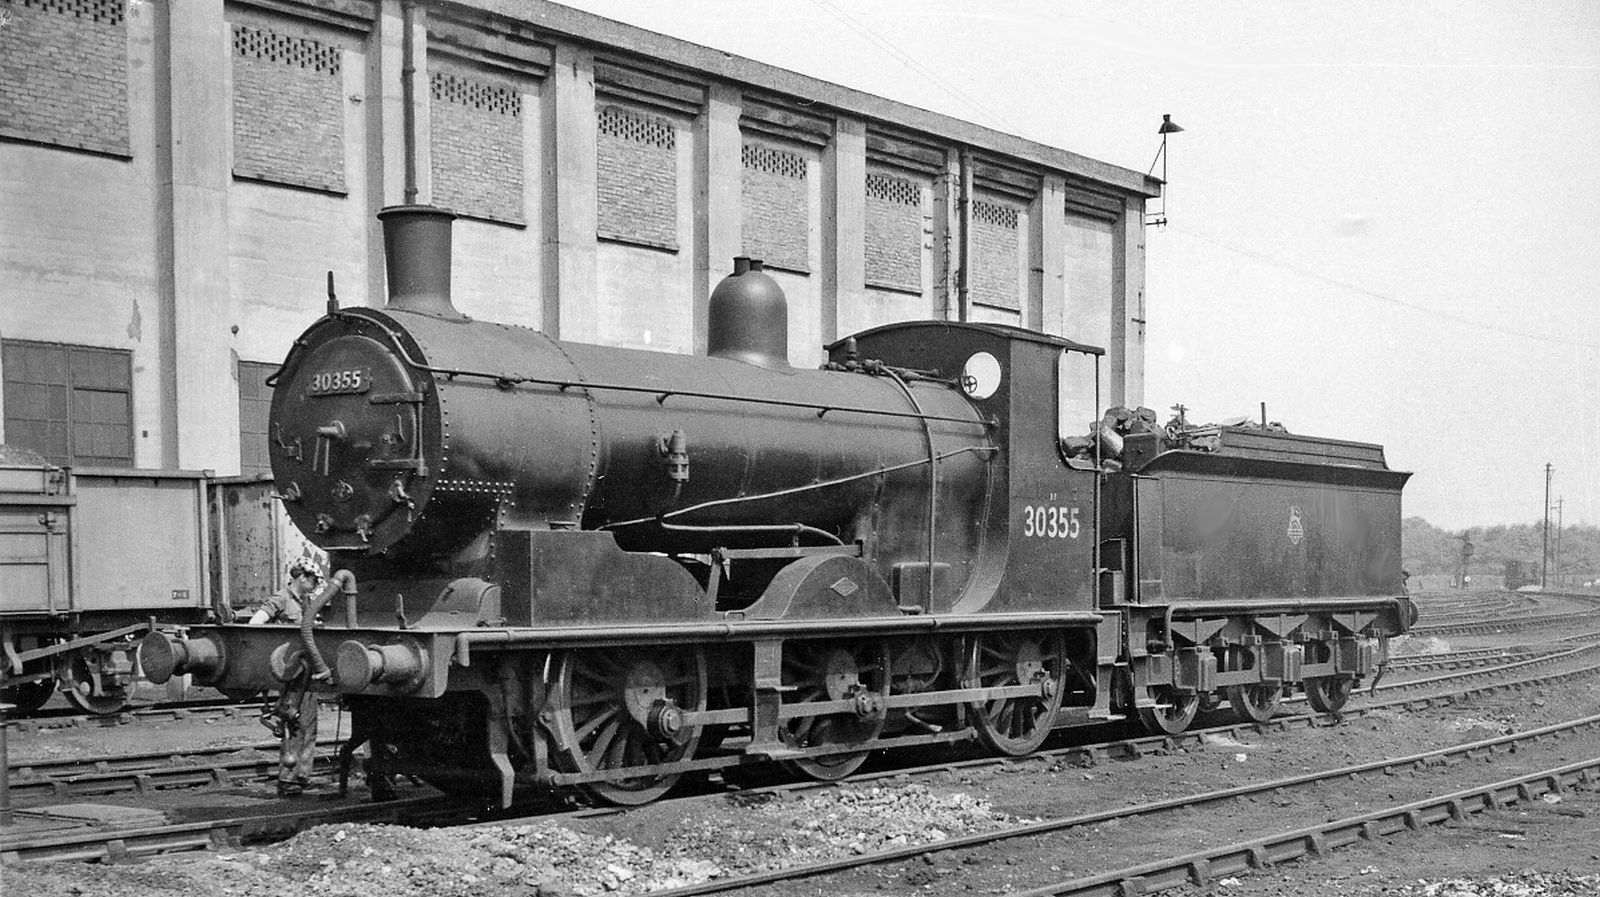 British Railways No. 30355 in May 1959 at Feltham depot